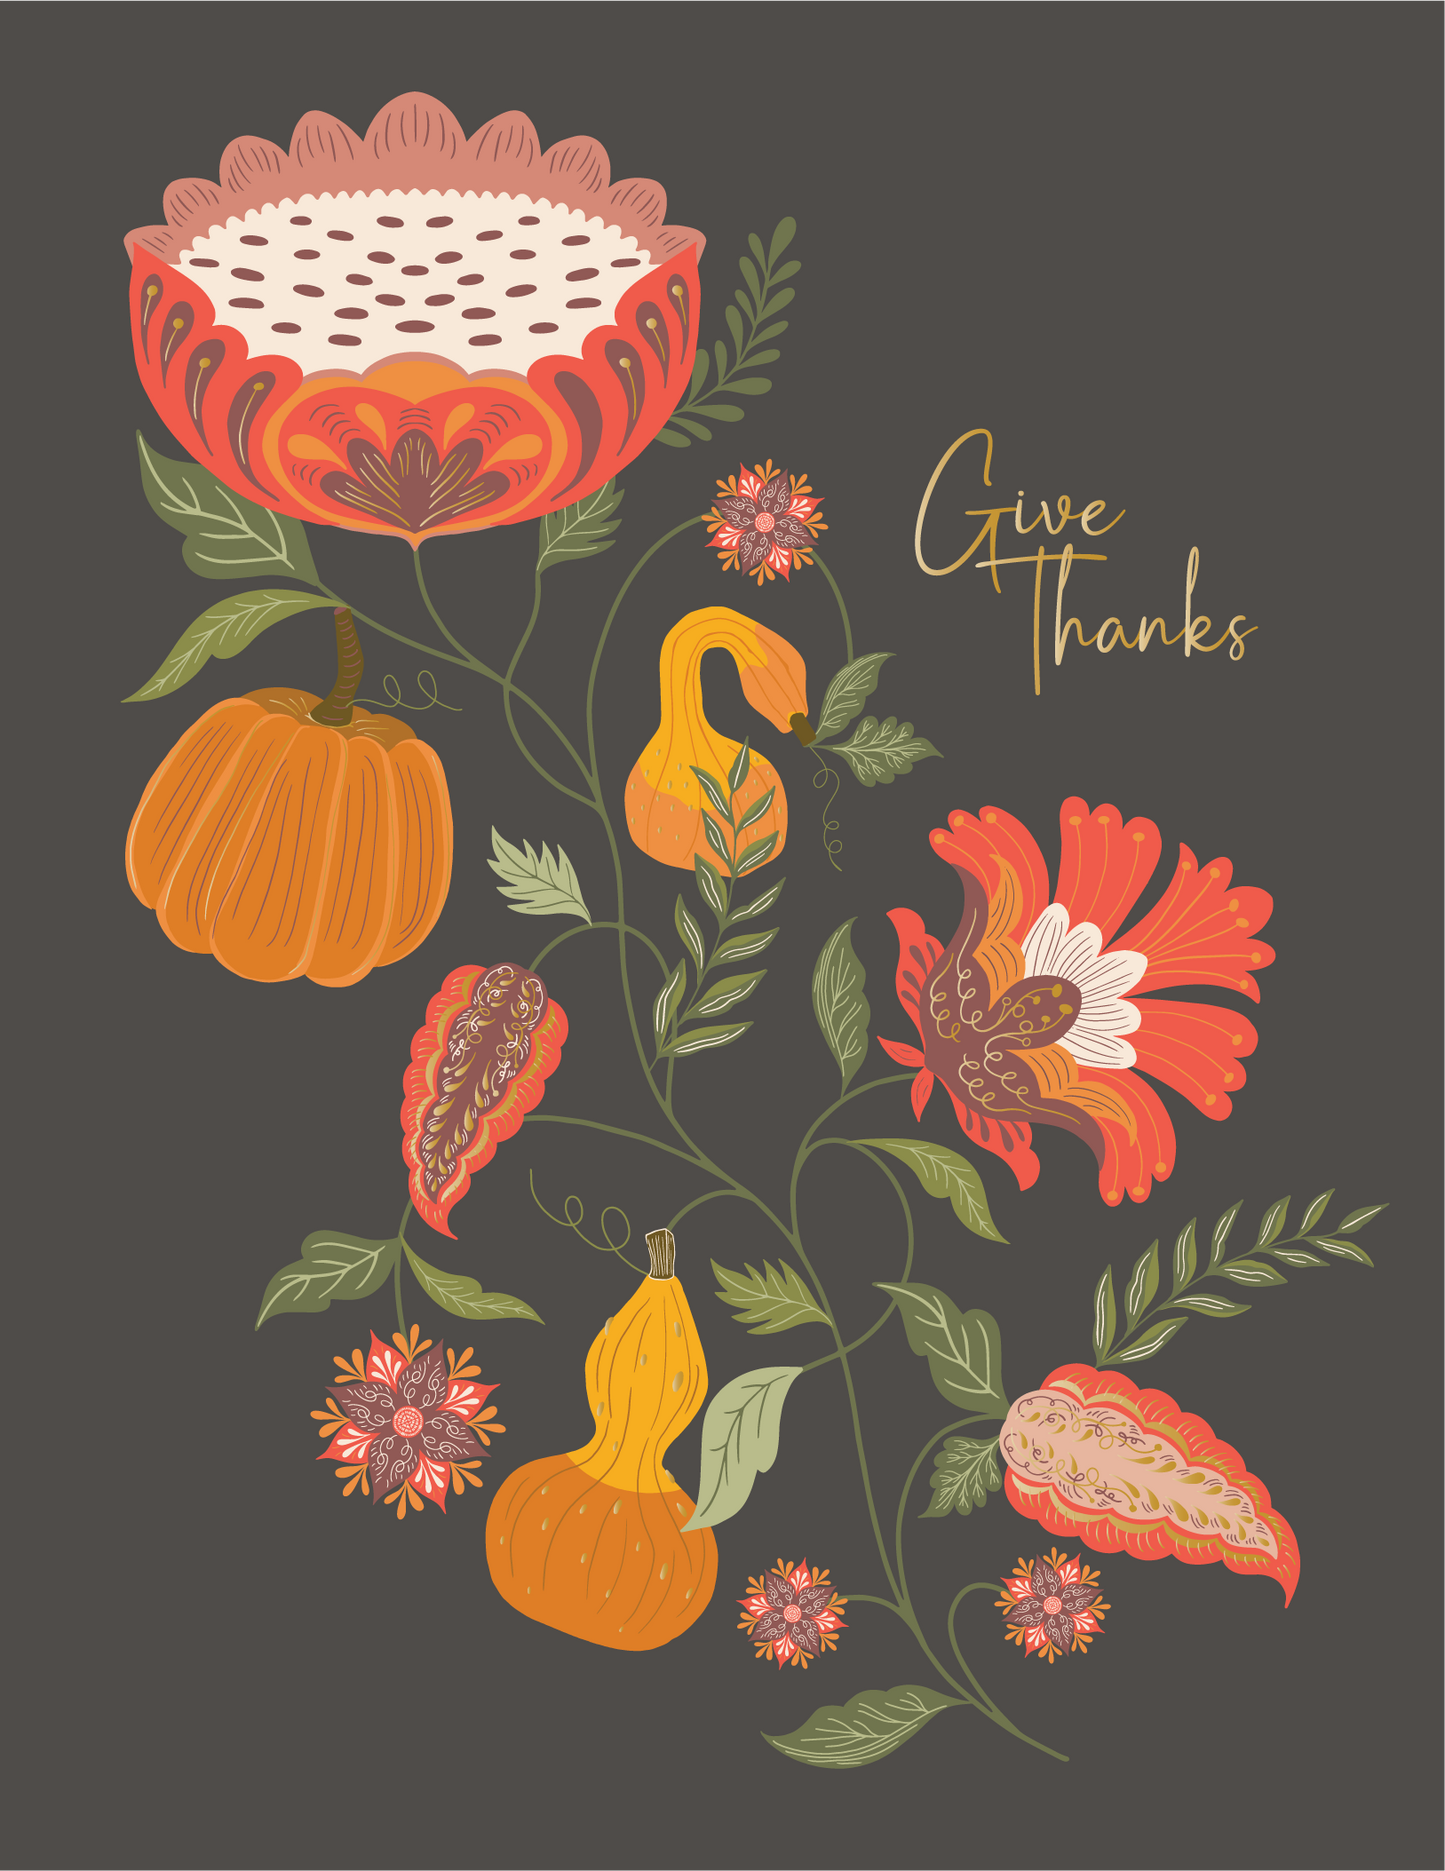 Pumpkin Garden Give Thanks Gold Foil Greeting Card